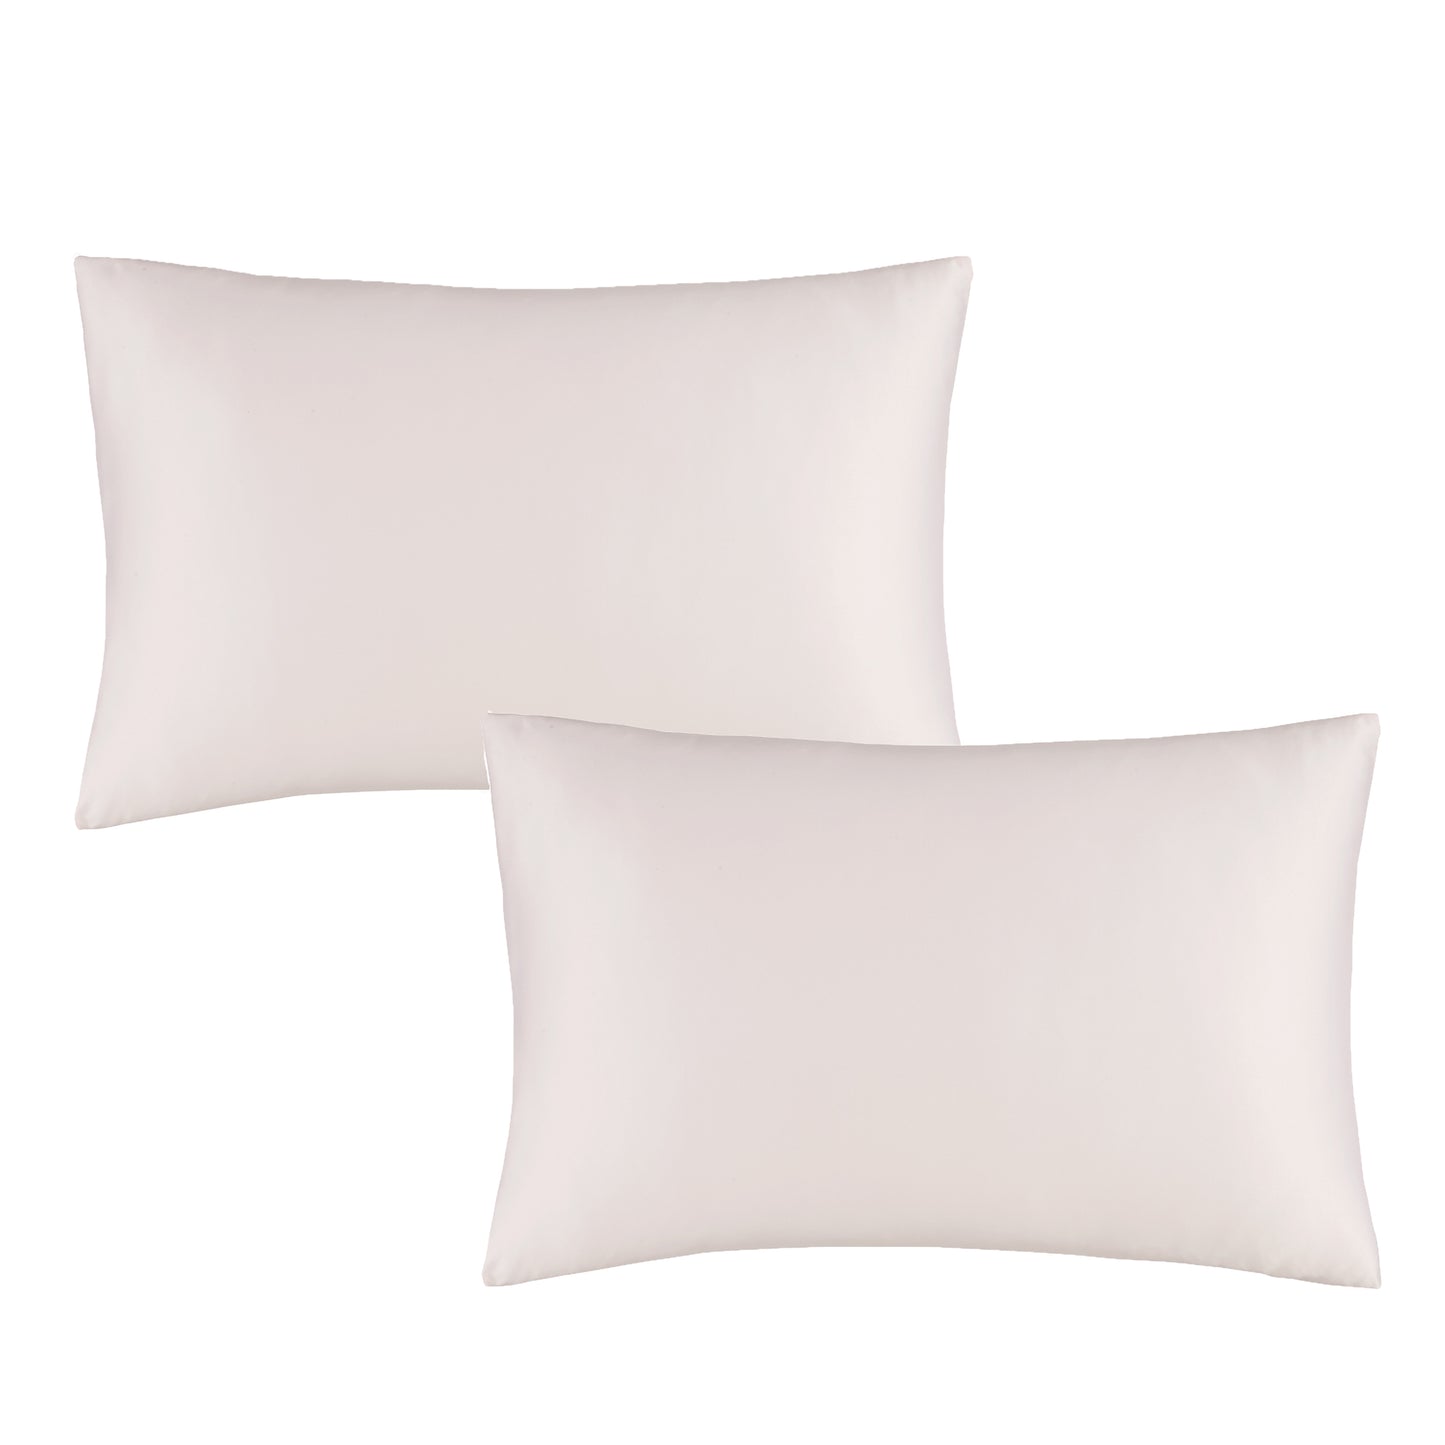 Catherine Lansfield Blush Pink Silky Soft Satin Standard Pillowcase Pair